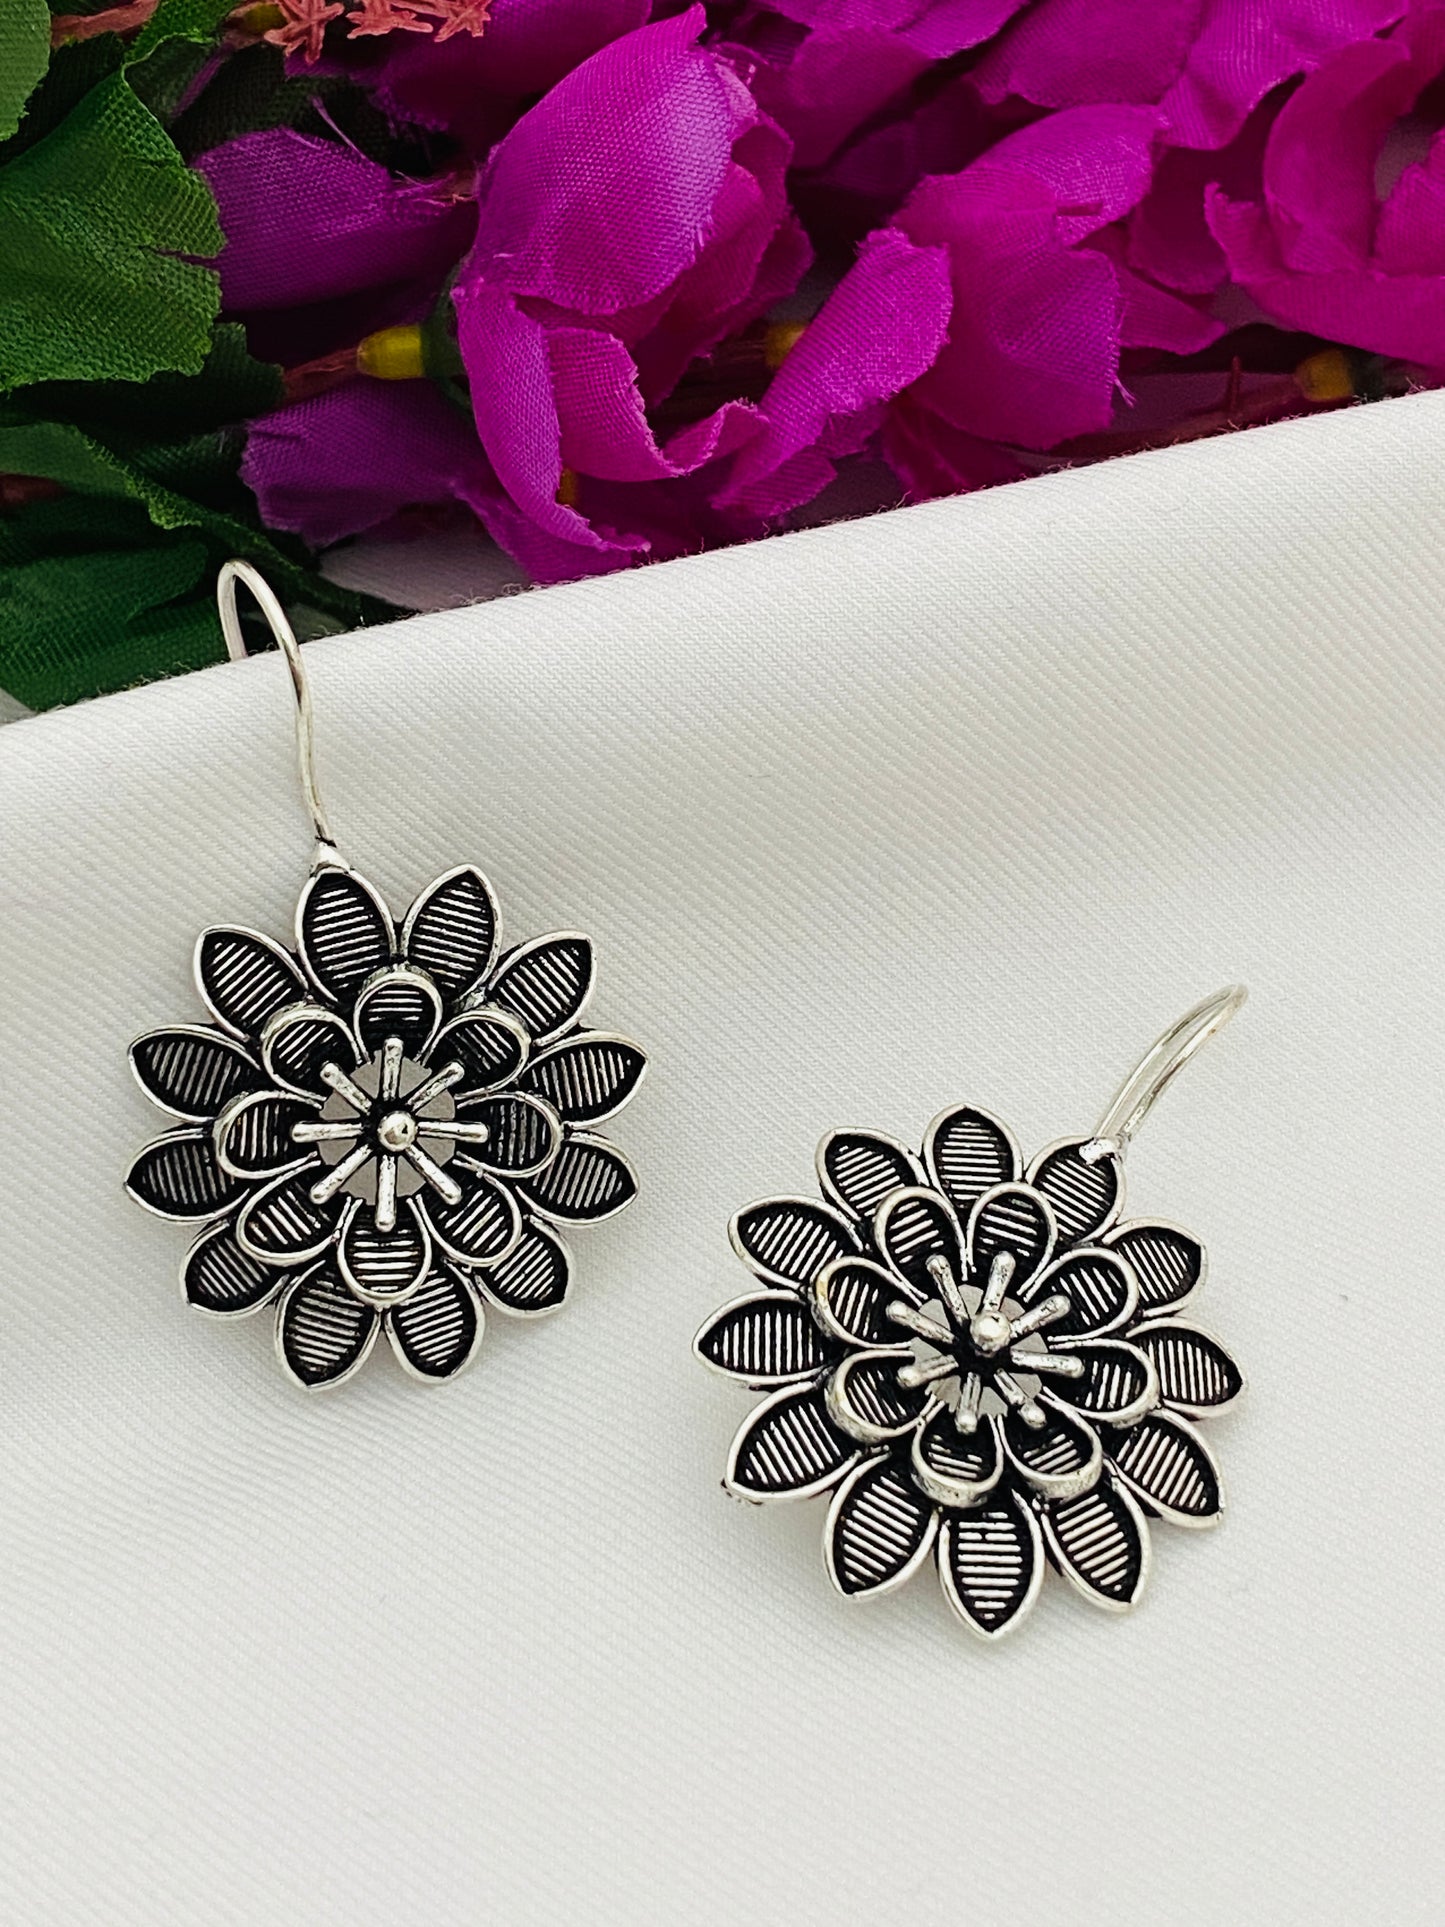 Dazzling Floral Designed German Silver Plated Earrings in Sahuarita